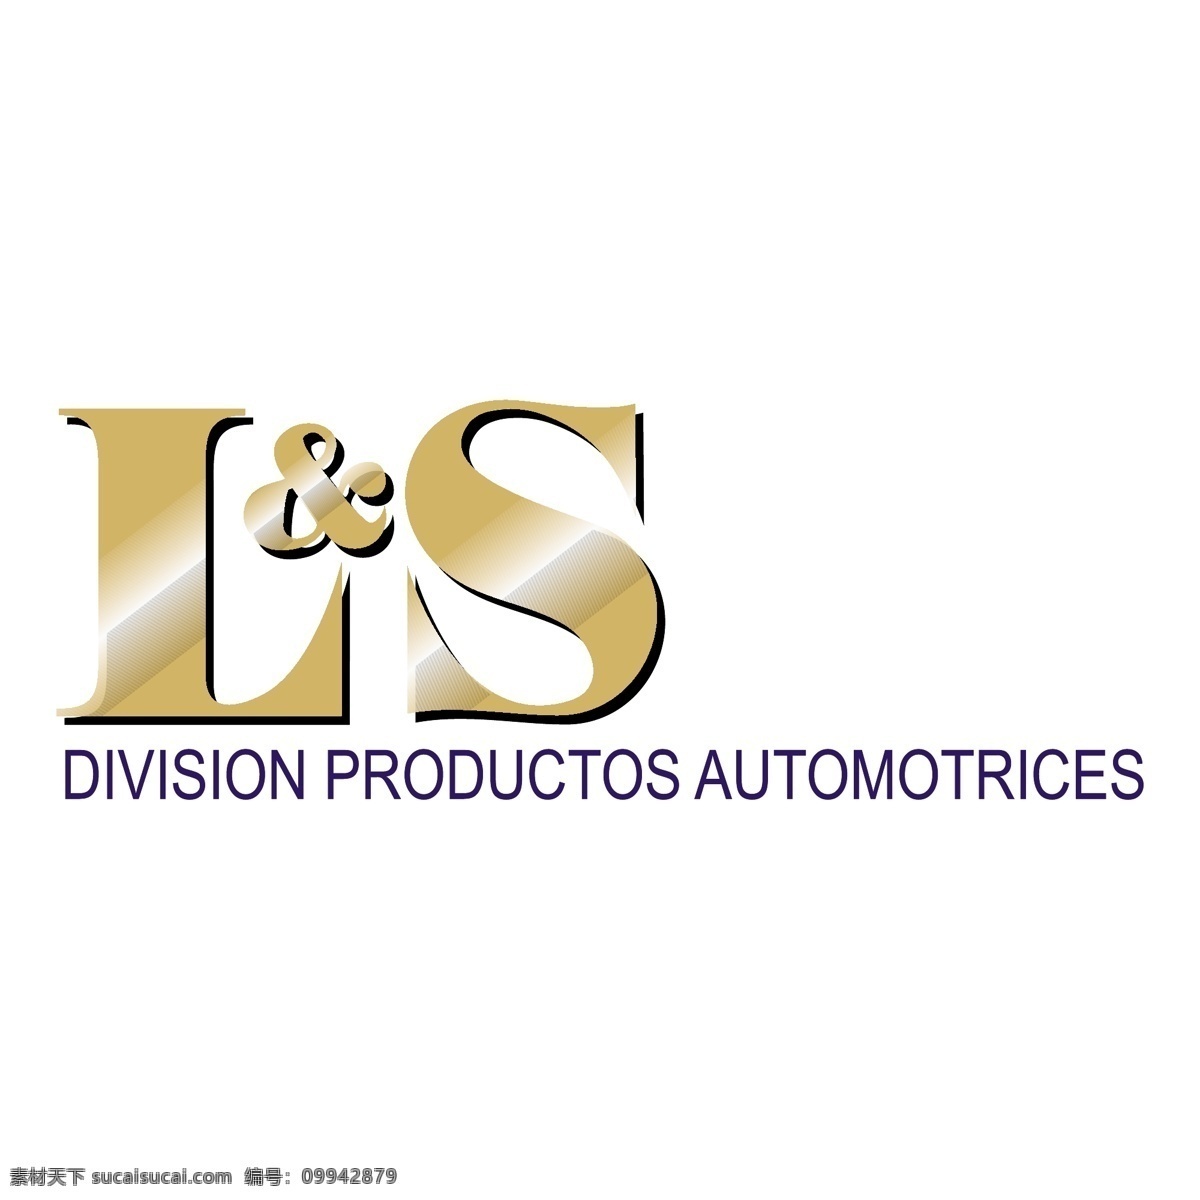 ls免费下载 ls标志 ls矢量标志 矢量标志ls ls ls标志设计 向量 向量ls 标志ls 矢量图 建筑家居